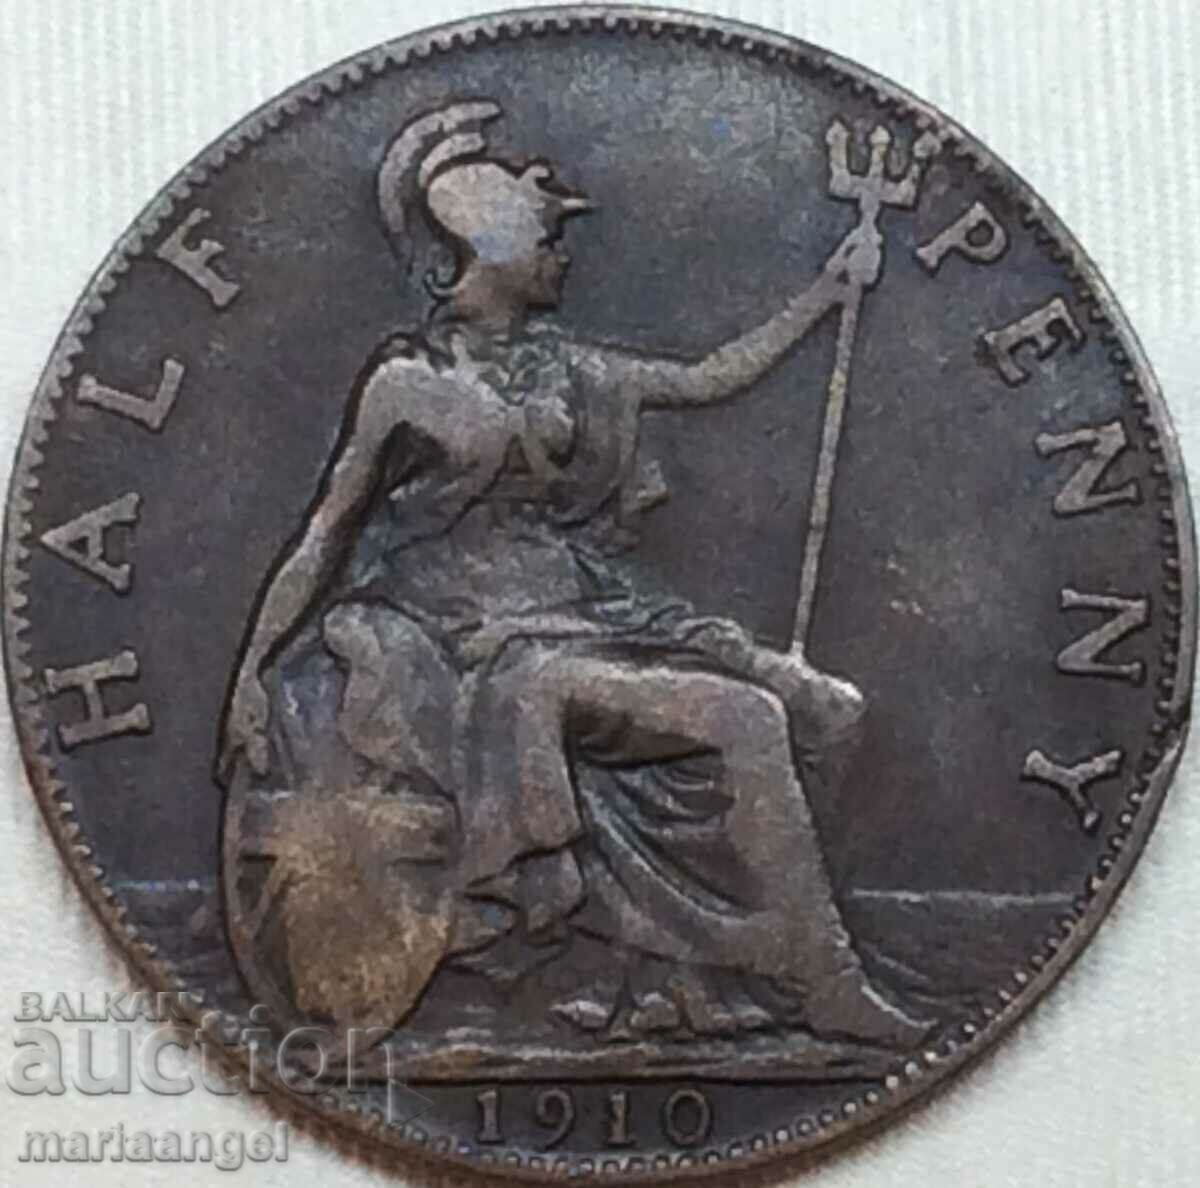 Great Britain 1/2 penny 1910 Edward VII - quite rare